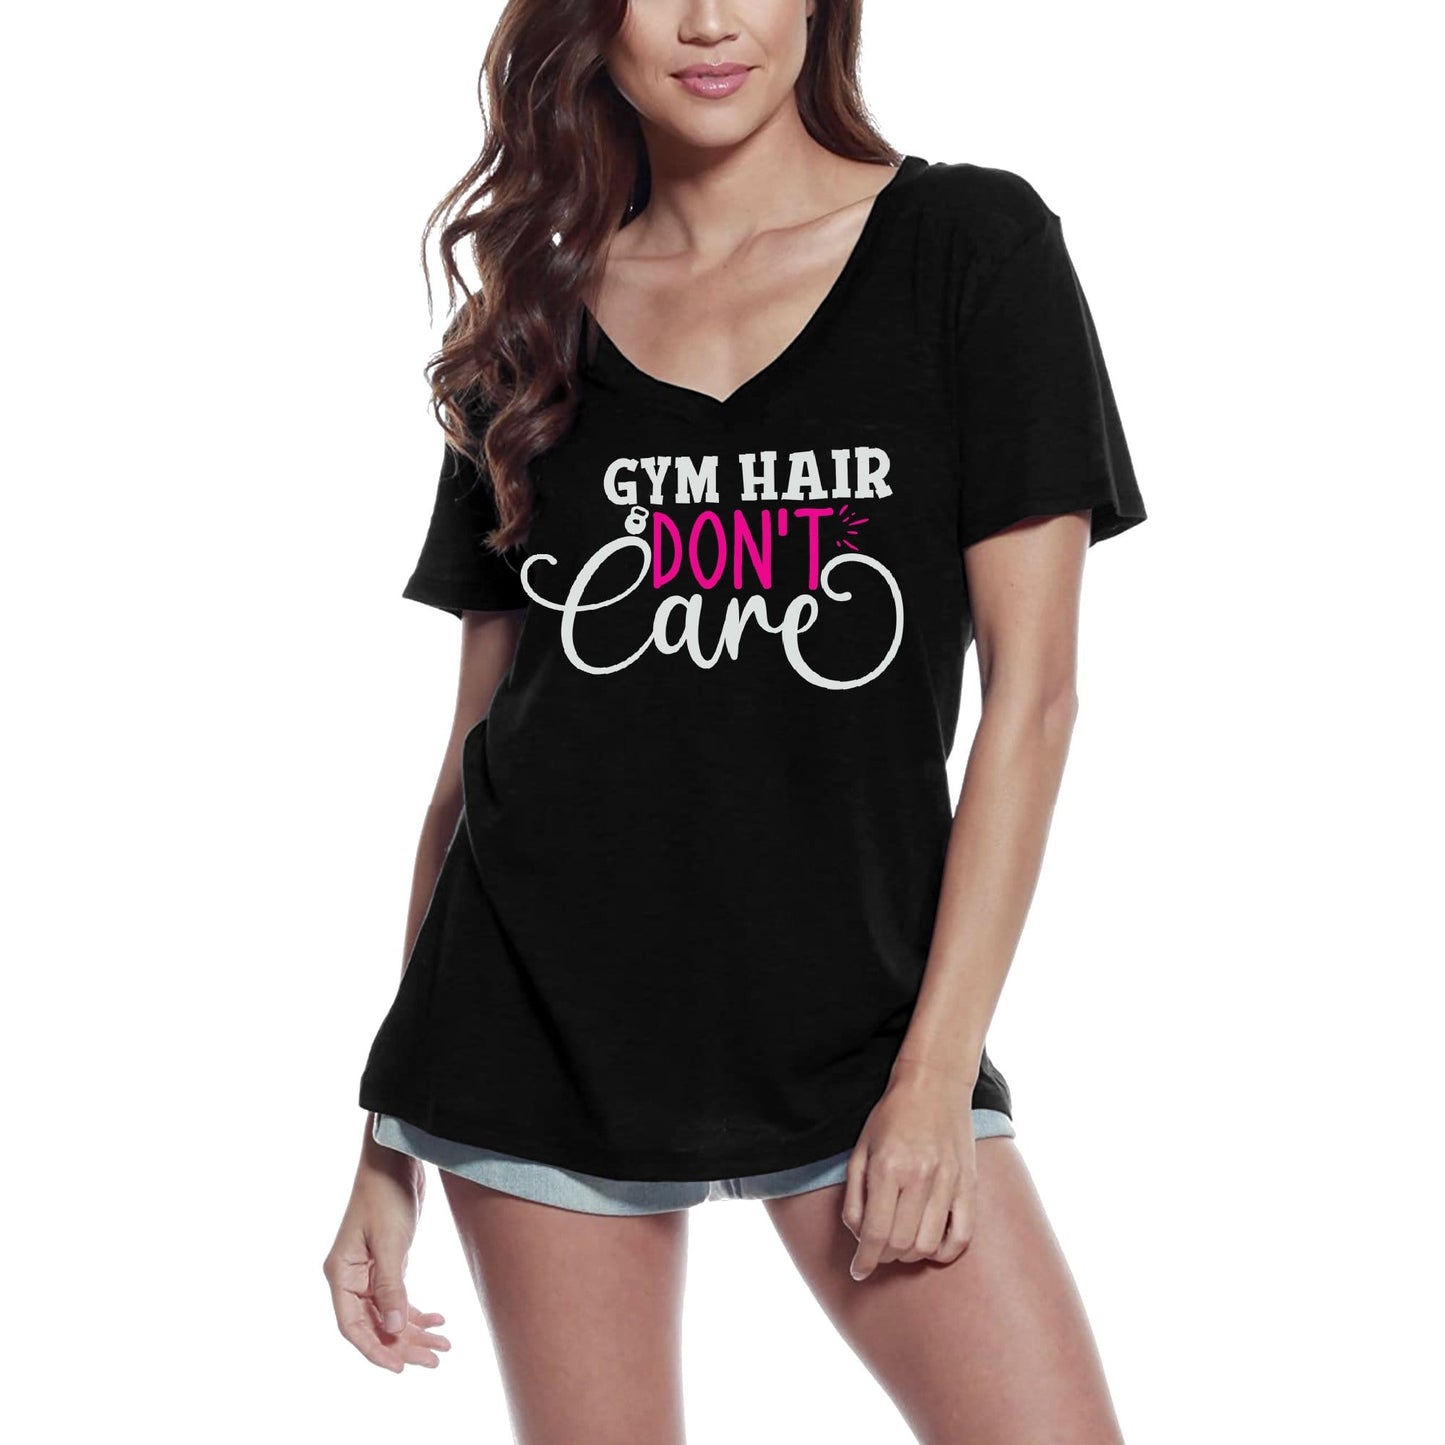 ULTRABASIC Women's Novelty T-Shirt Gym Hair Don't Care - Funny Gym Tee Shirt